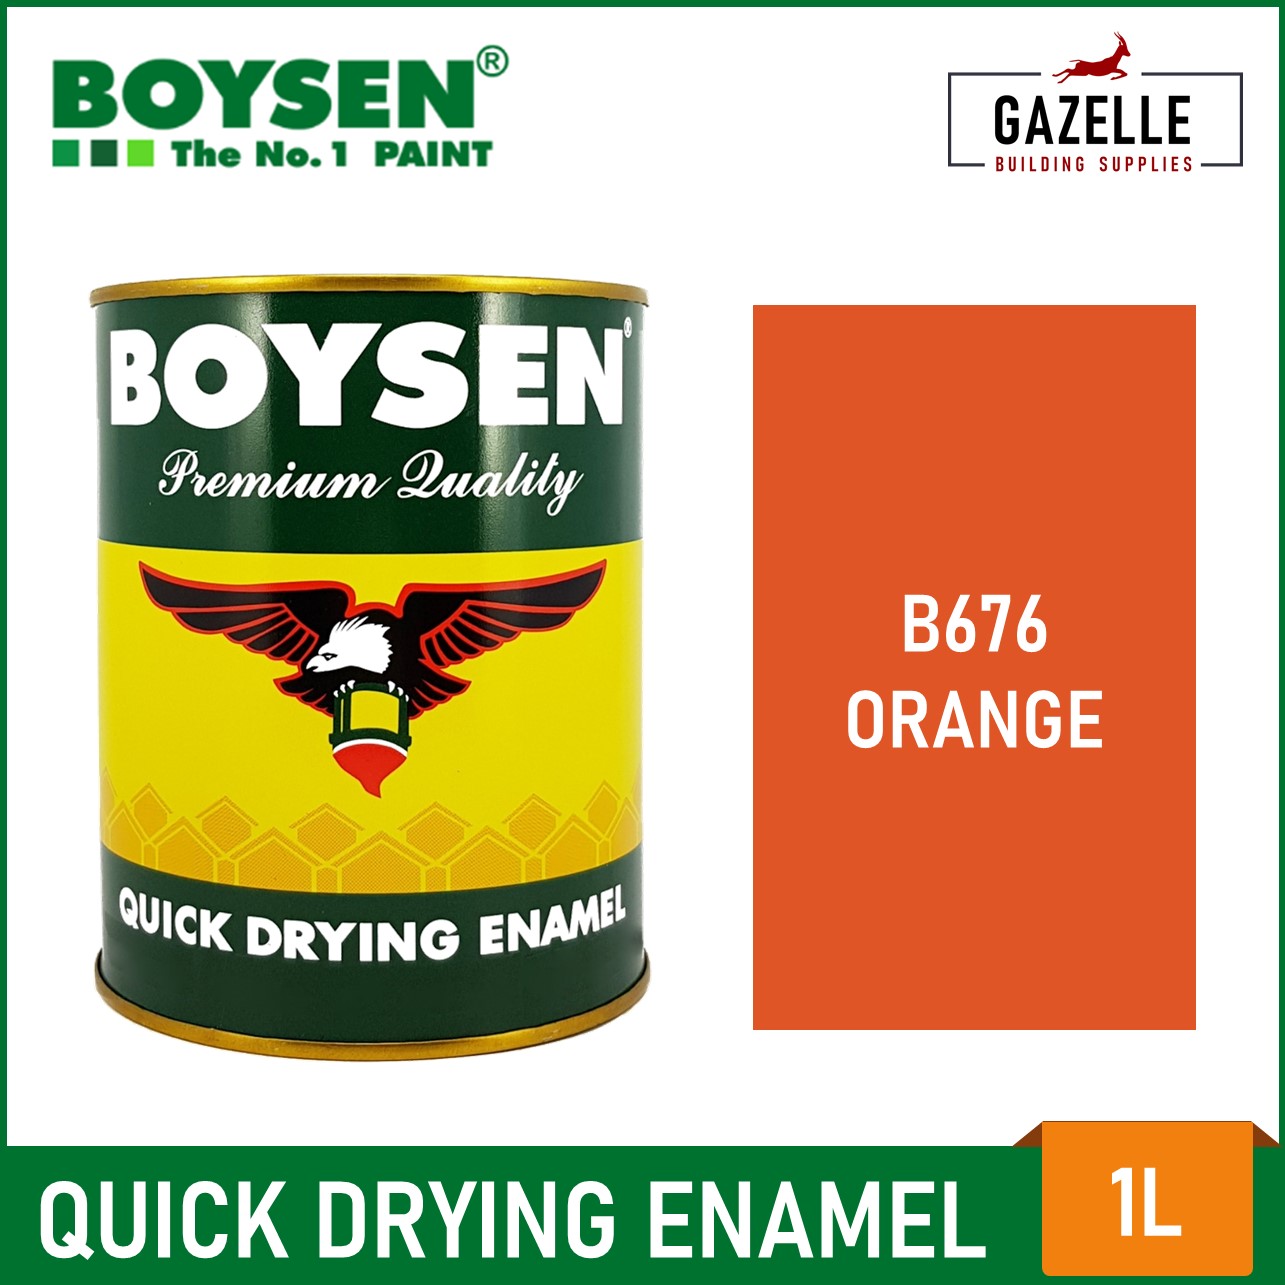 Boysen Quick Dry Enamel Jade Green - 1L